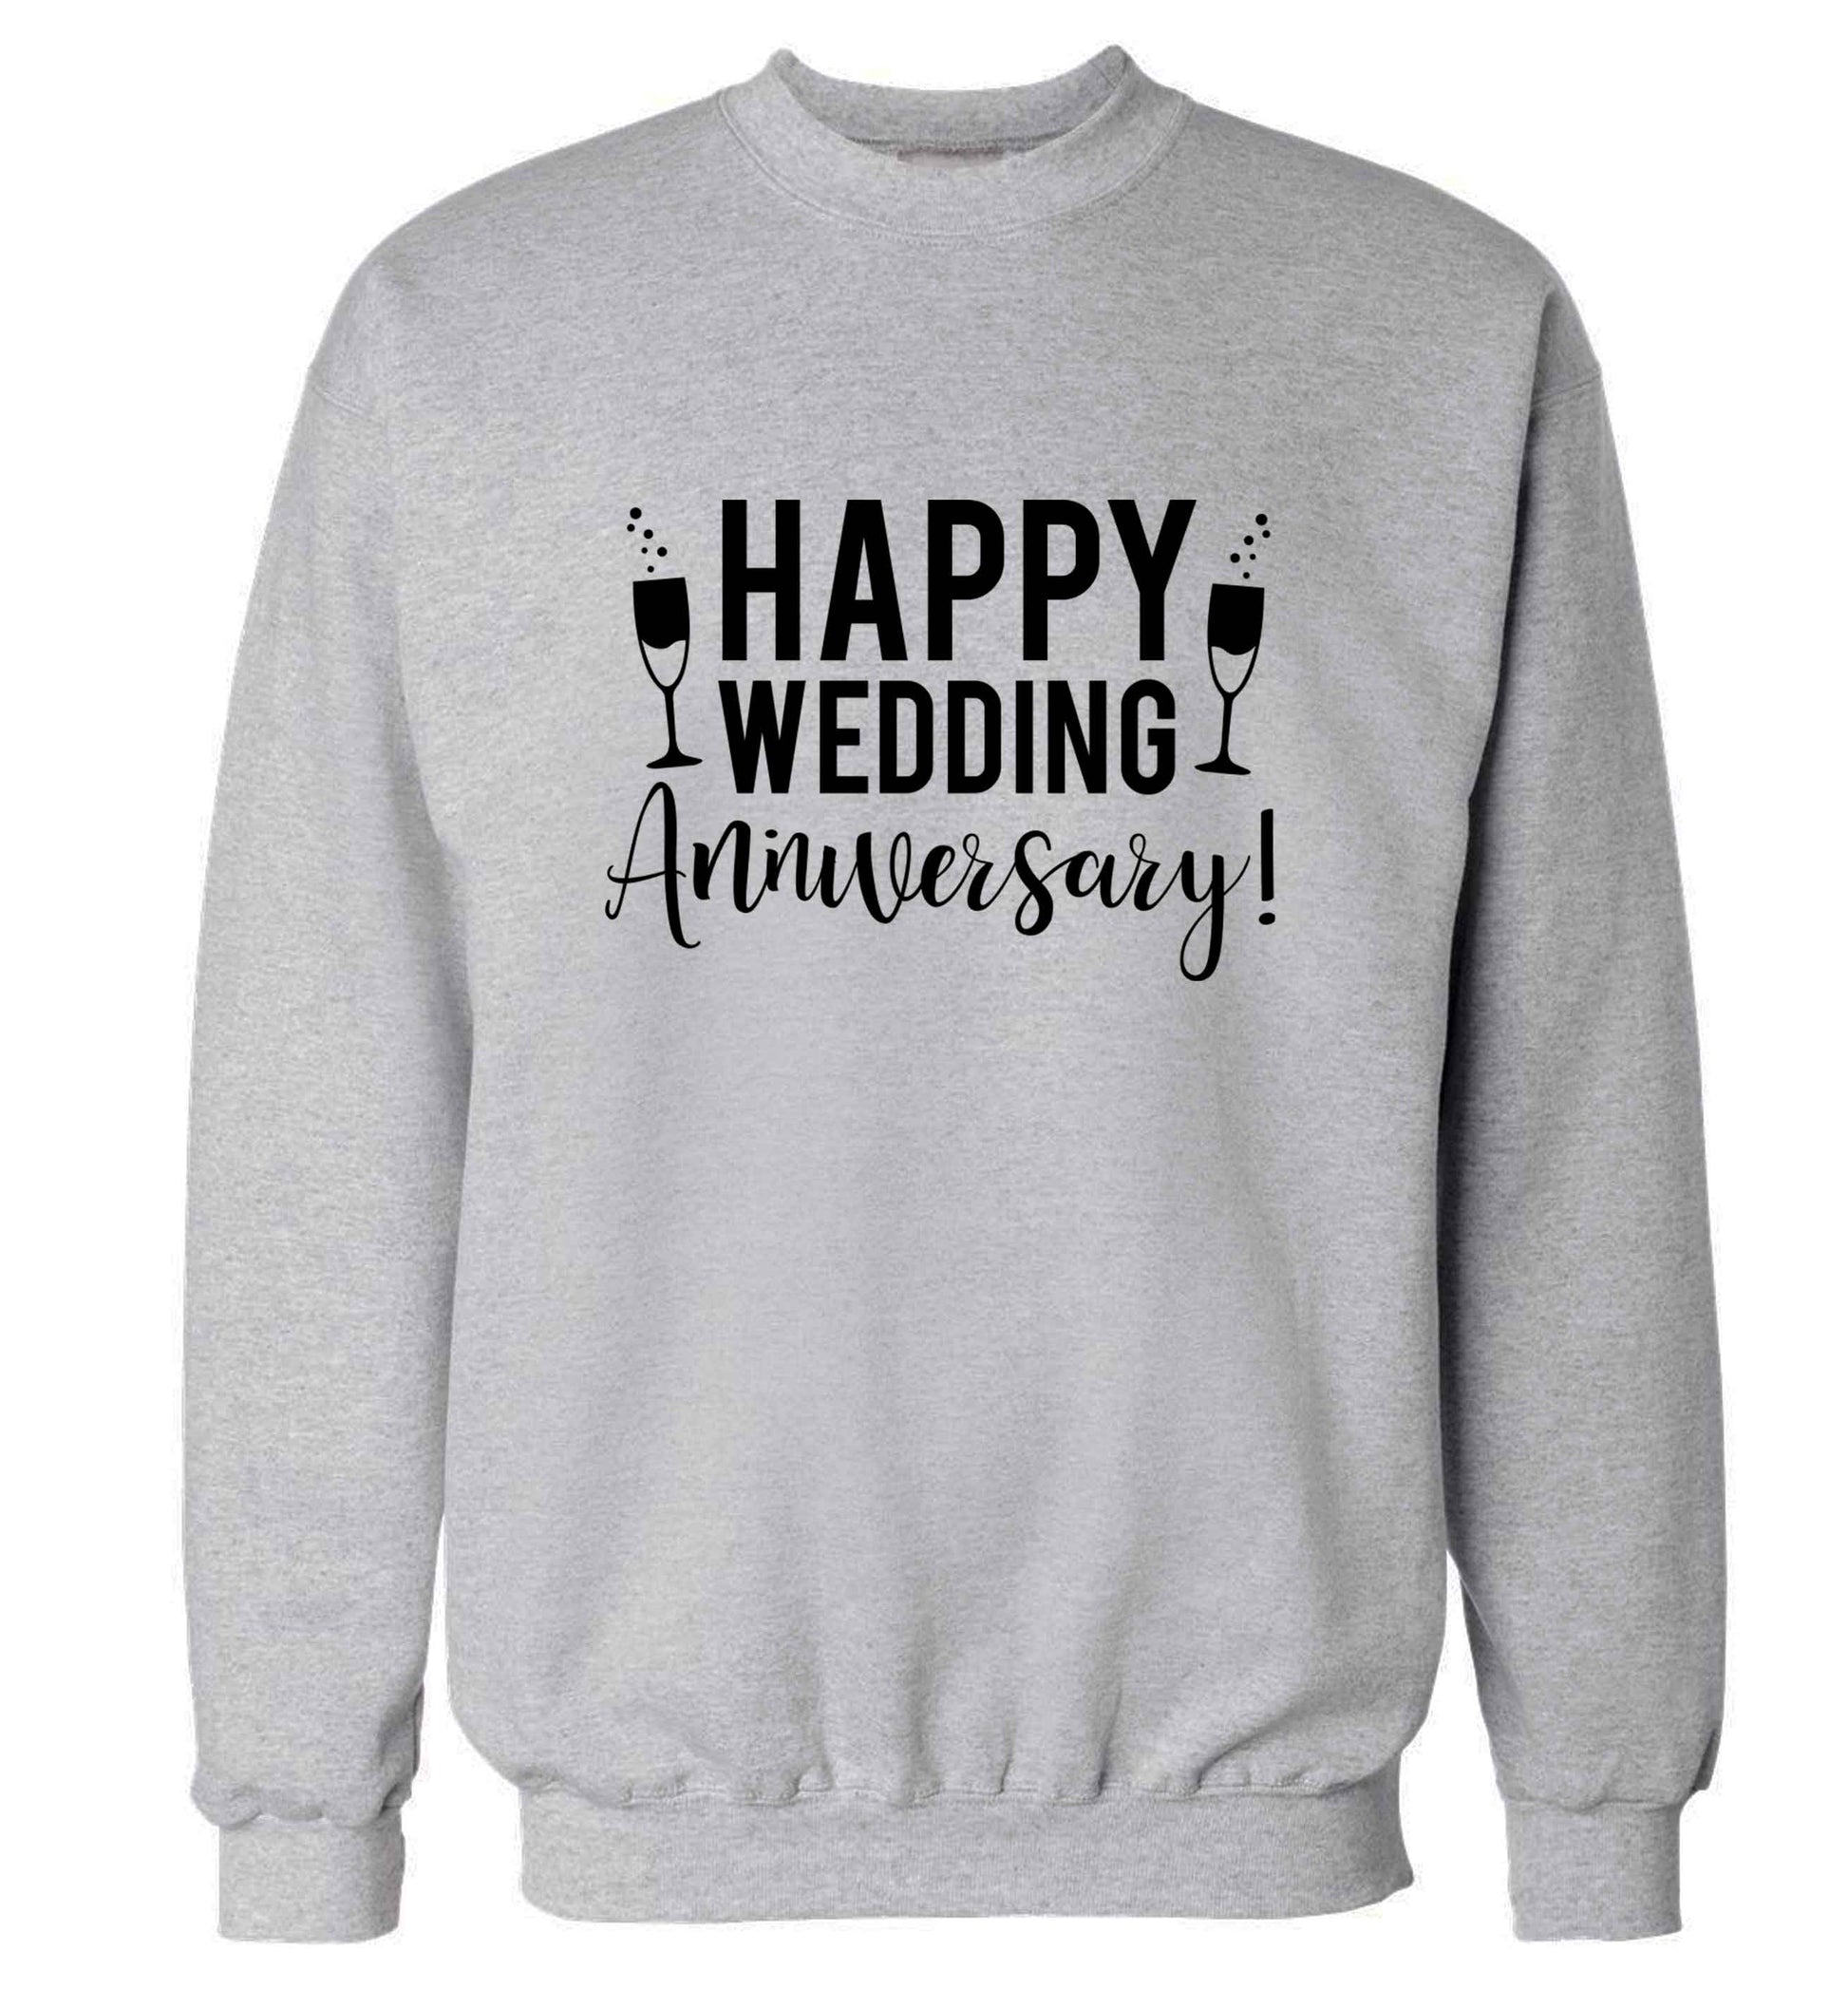 Happy wedding anniversary! adult's unisex grey sweater 2XL